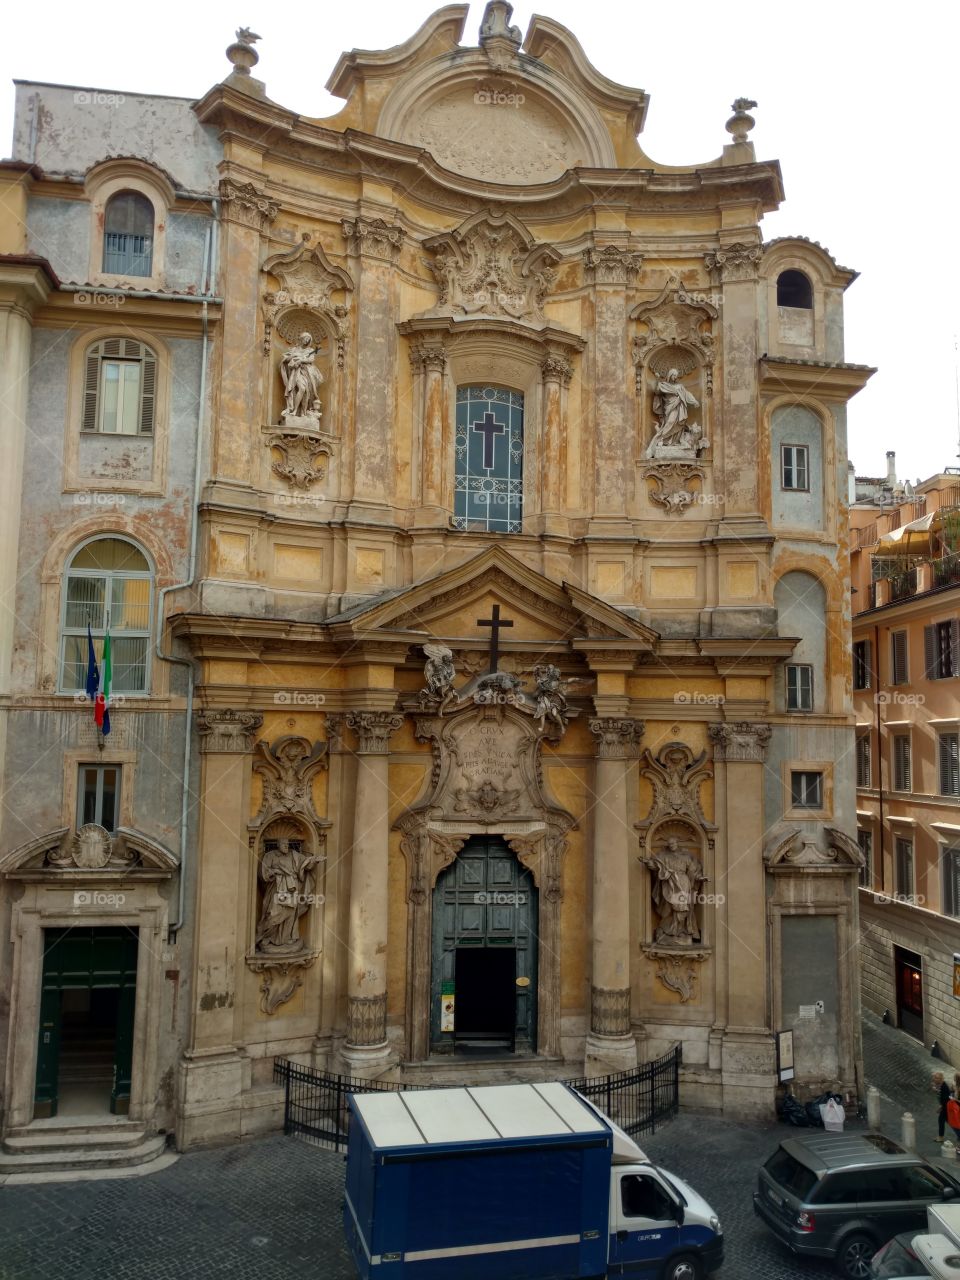 Chapel in a Busy Roman Square